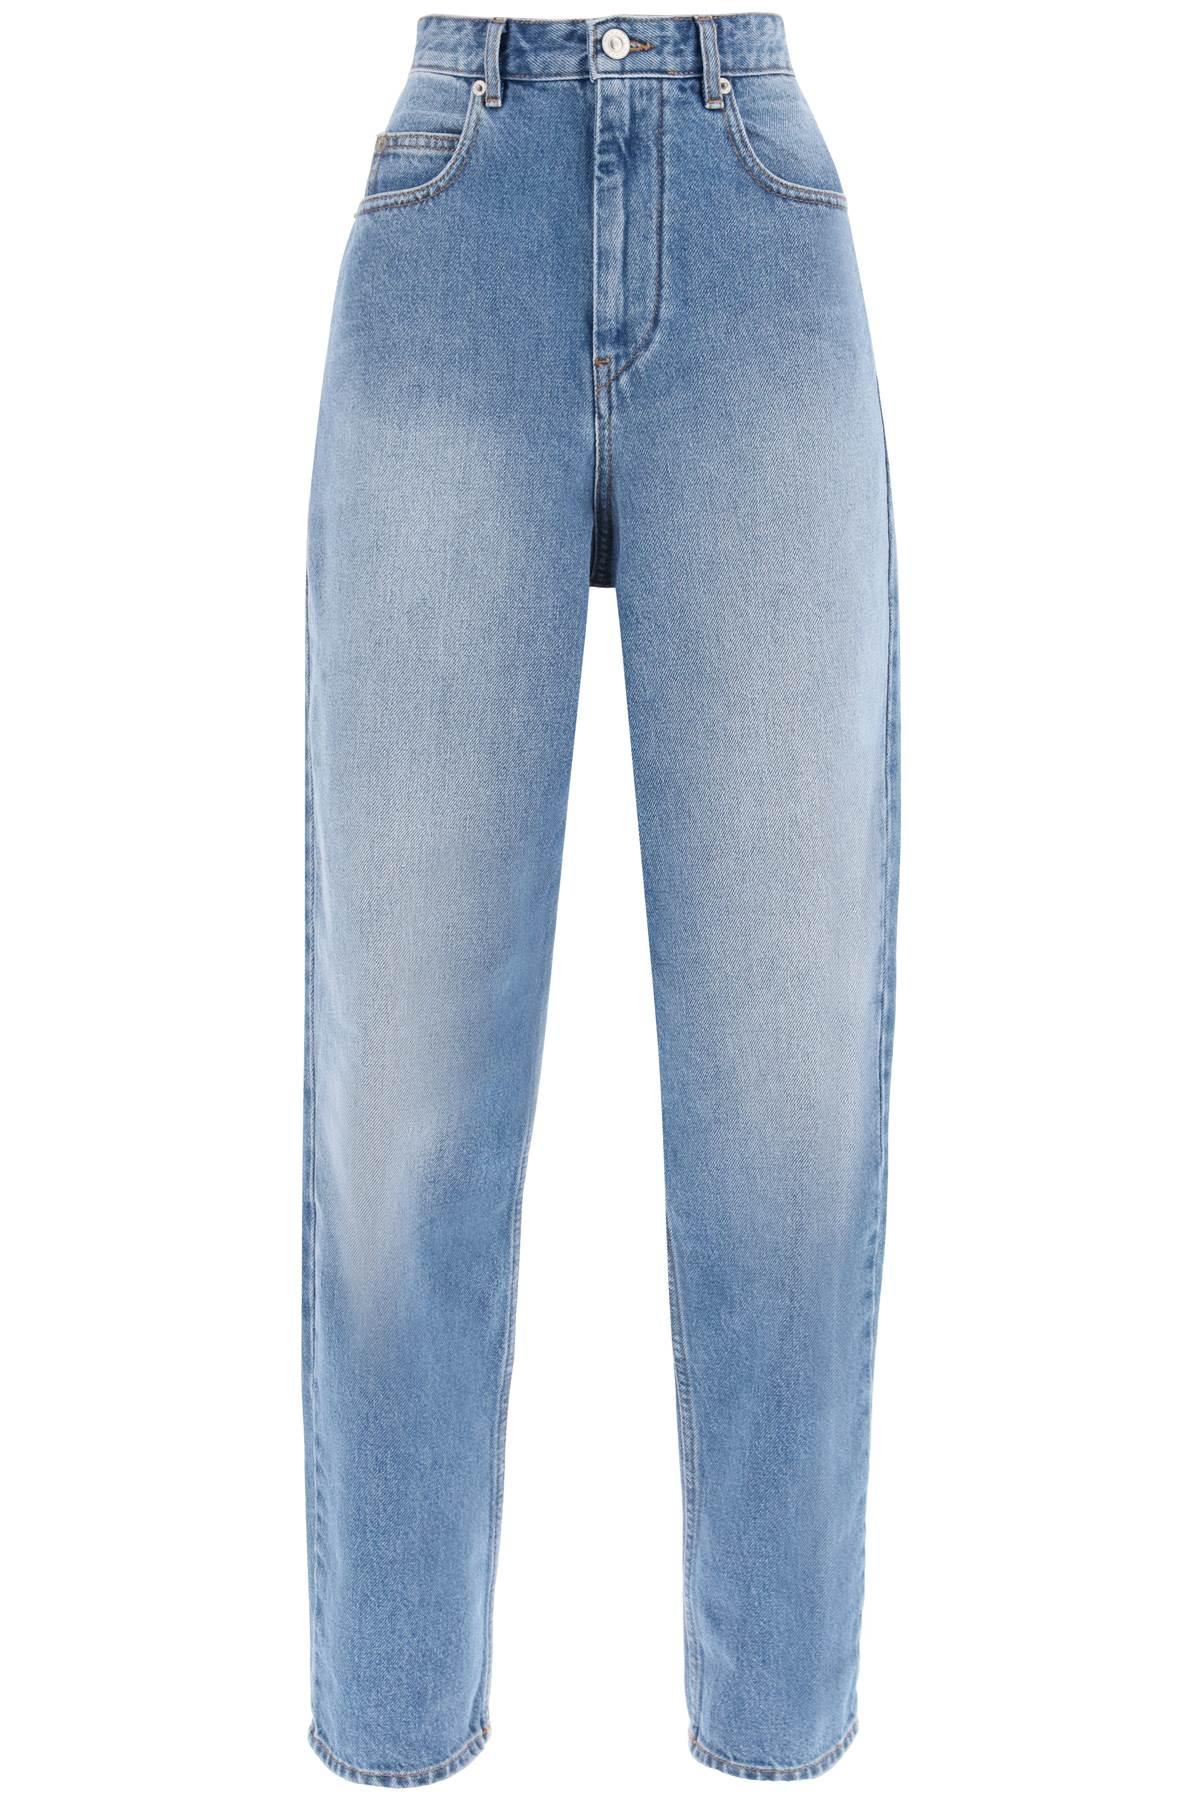 Jeans sueltos 'Corsy' Marant Etoile con corte cónico